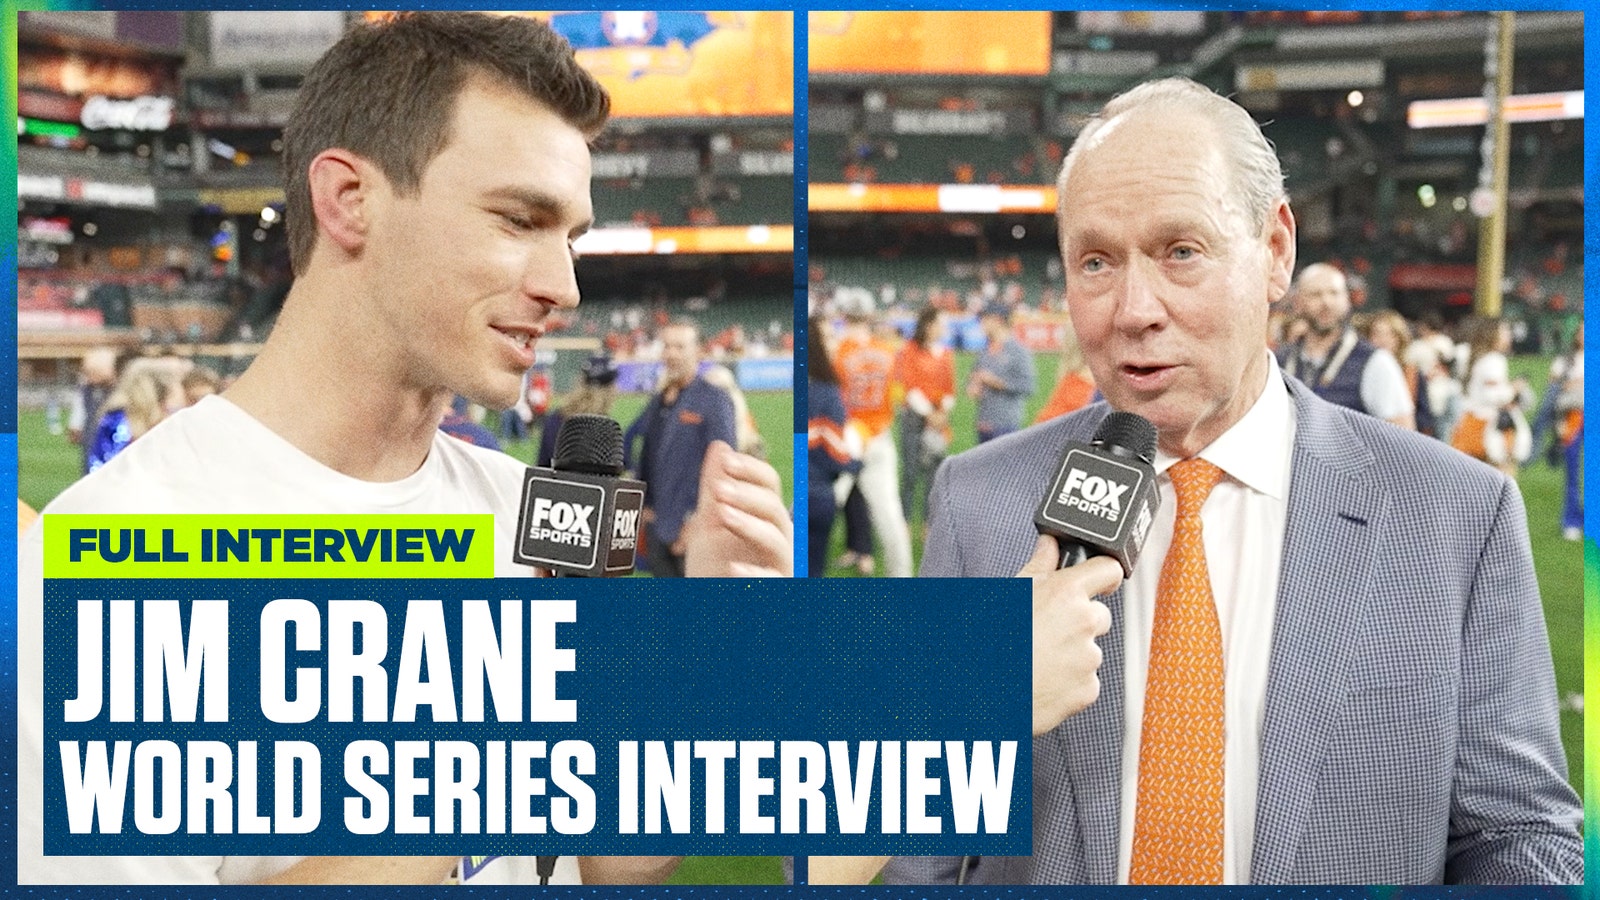 Astros owner Jim Crane discusses the title